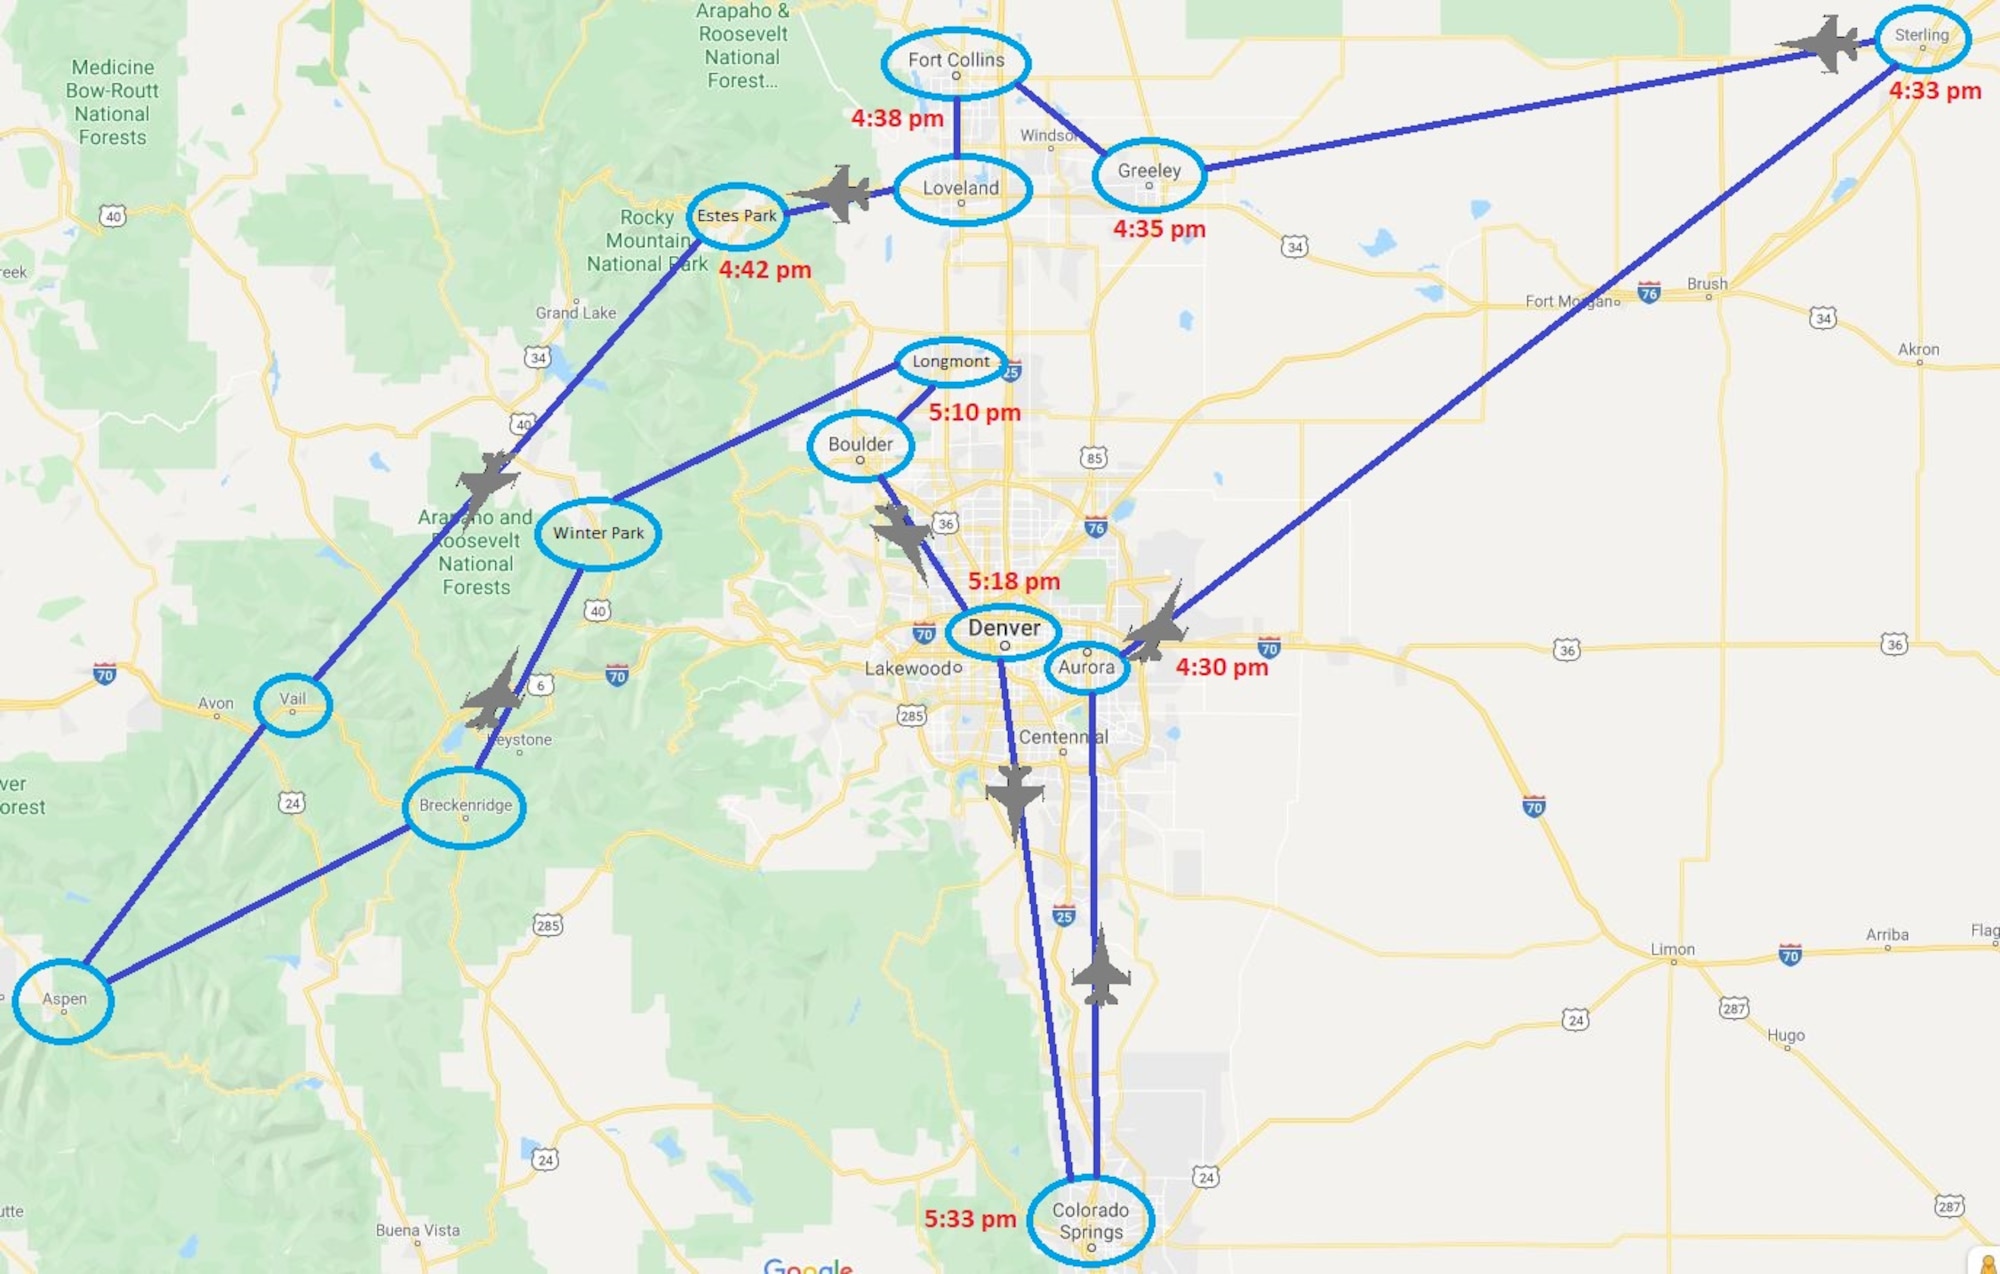 Map of Colorado with flight path